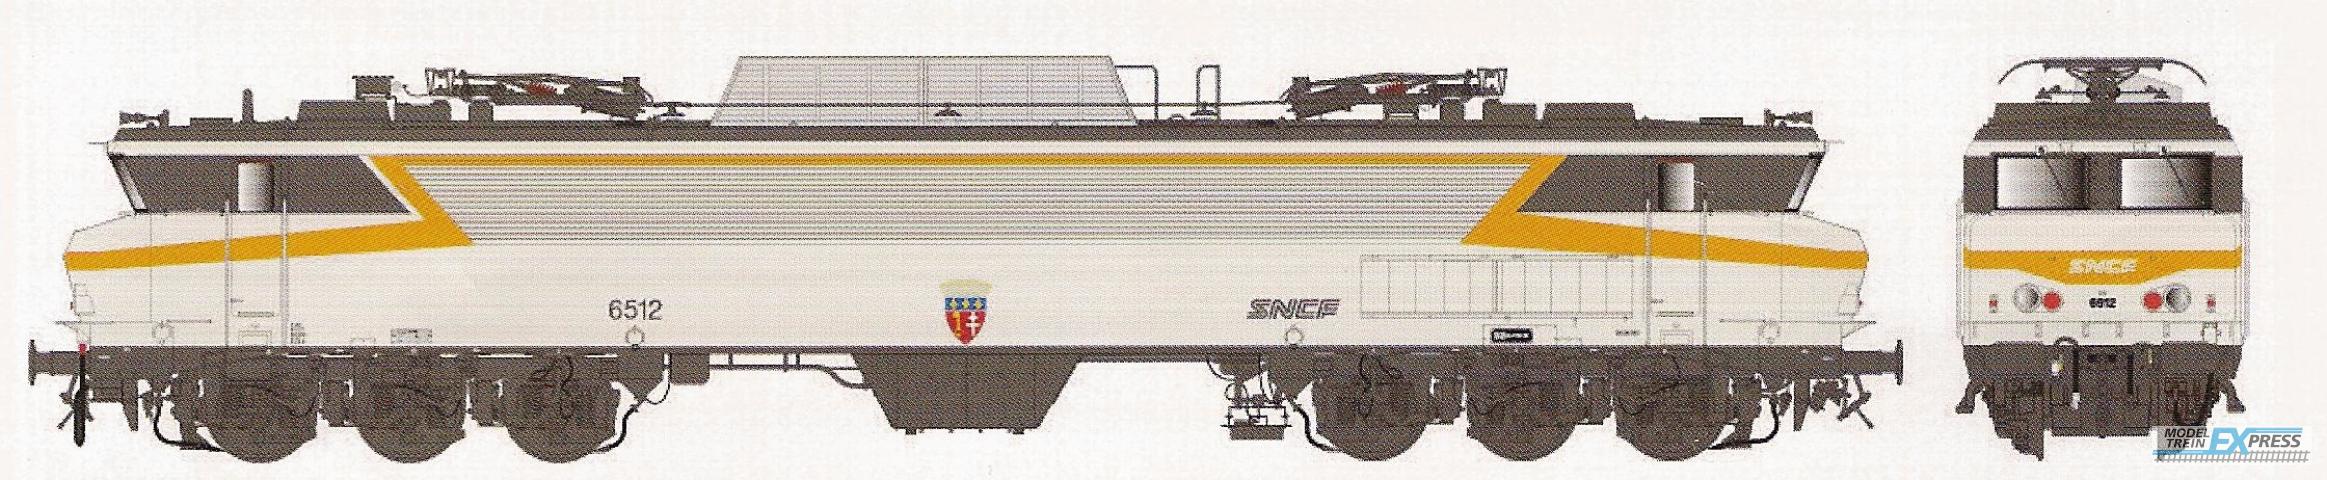 LS Models 10327 CC 6512, grijs/oranje, noedels logo, blazoen Narbonne, 200 km/h  /  Ep. IV  /  SNCF  /  HO  /  DC  /  1 P.